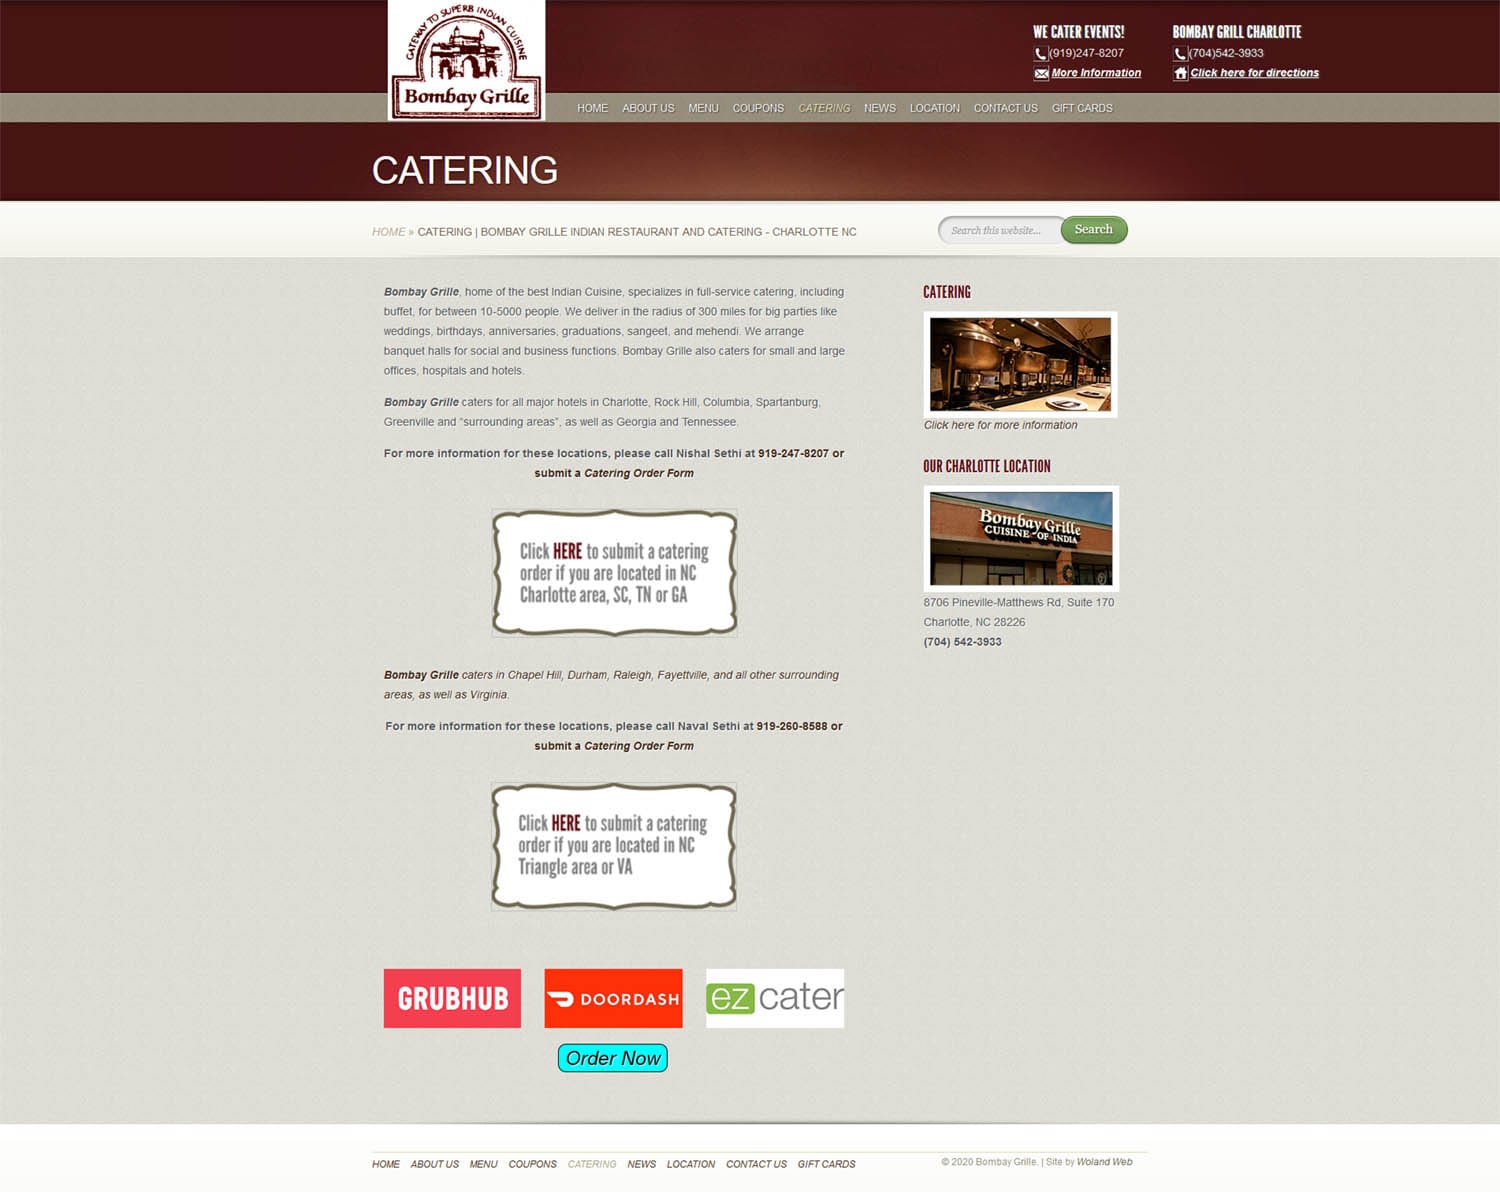 Bombay Grille restaurant website catering screenshot